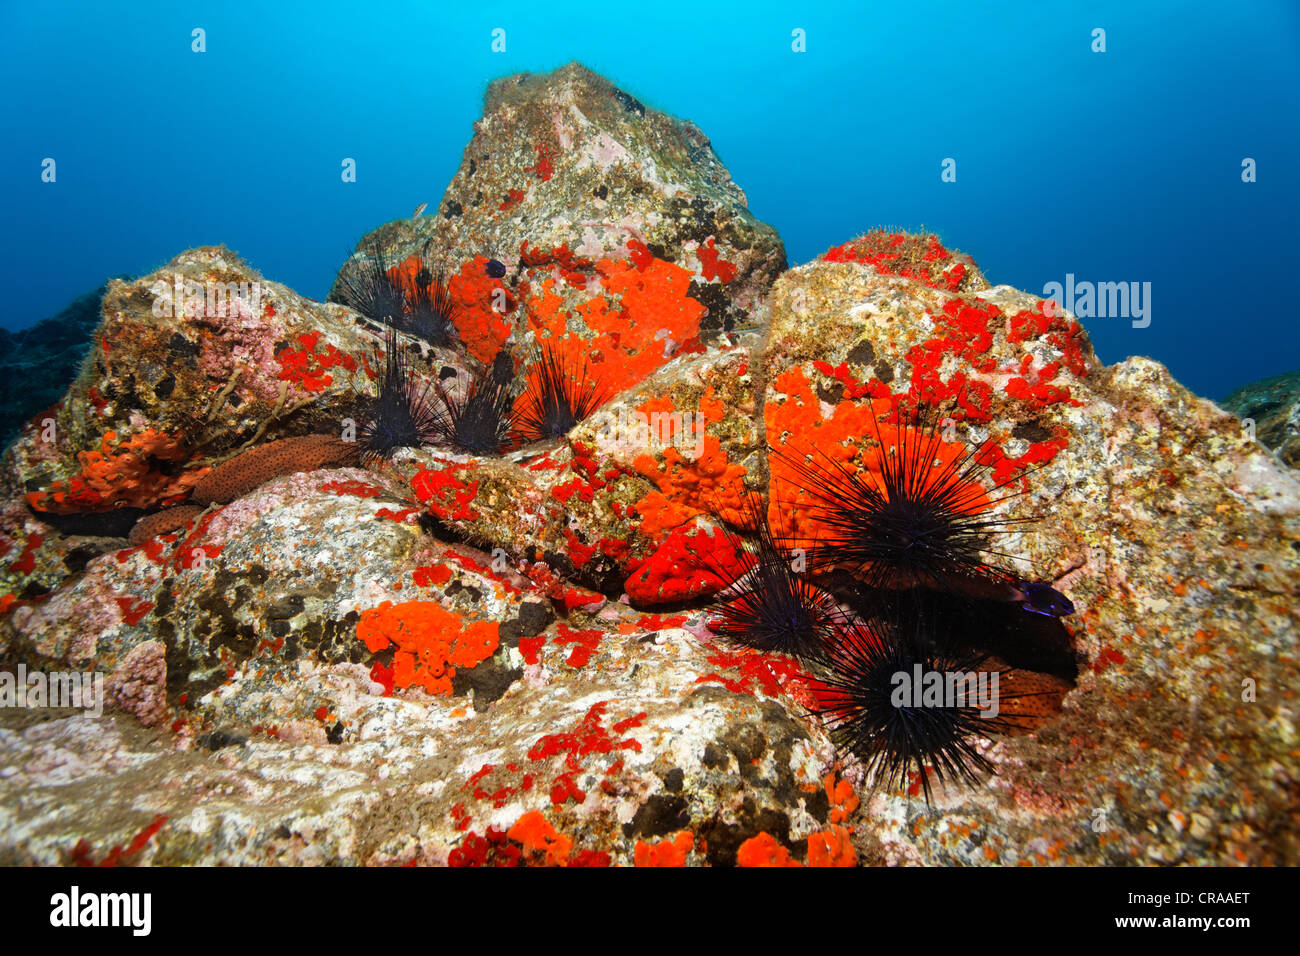 Variable Sea Cucumber (Holothuria sanctori), Common Sponge (Crambe crambe), brown-red Hatpin Urchins (Centrostephanus Stock Photo